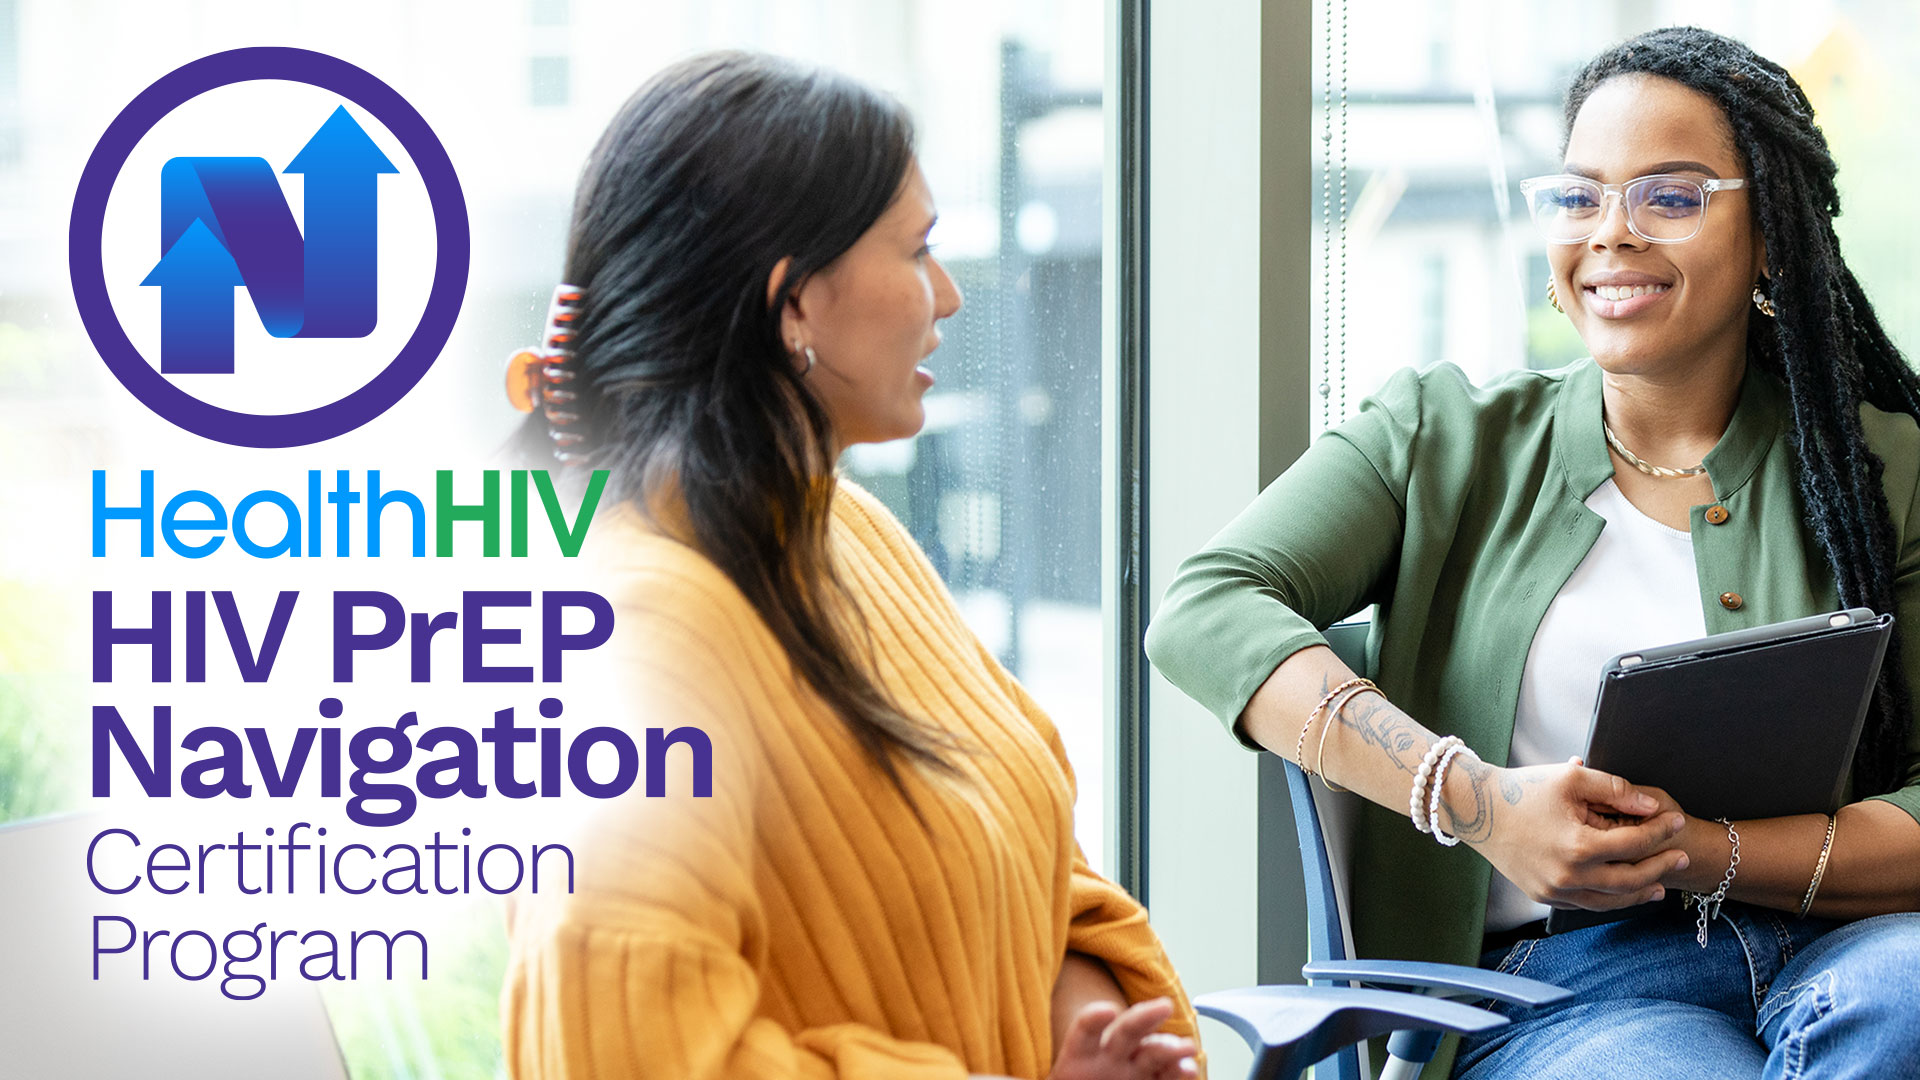 HealthHIV HIV PrEP Navigation Certification Program